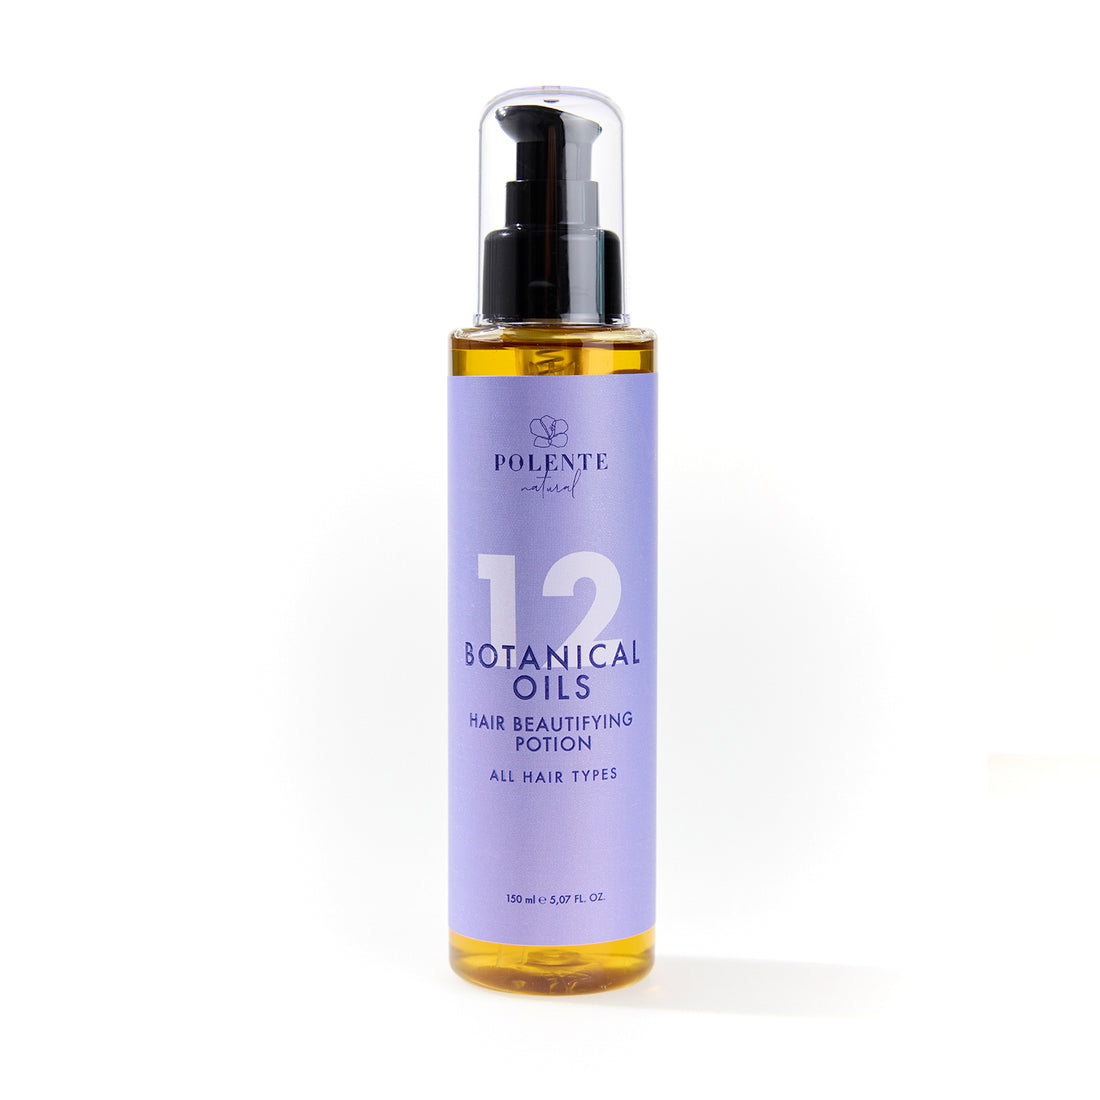 Hair Care Oil with 12 Botanical Oils